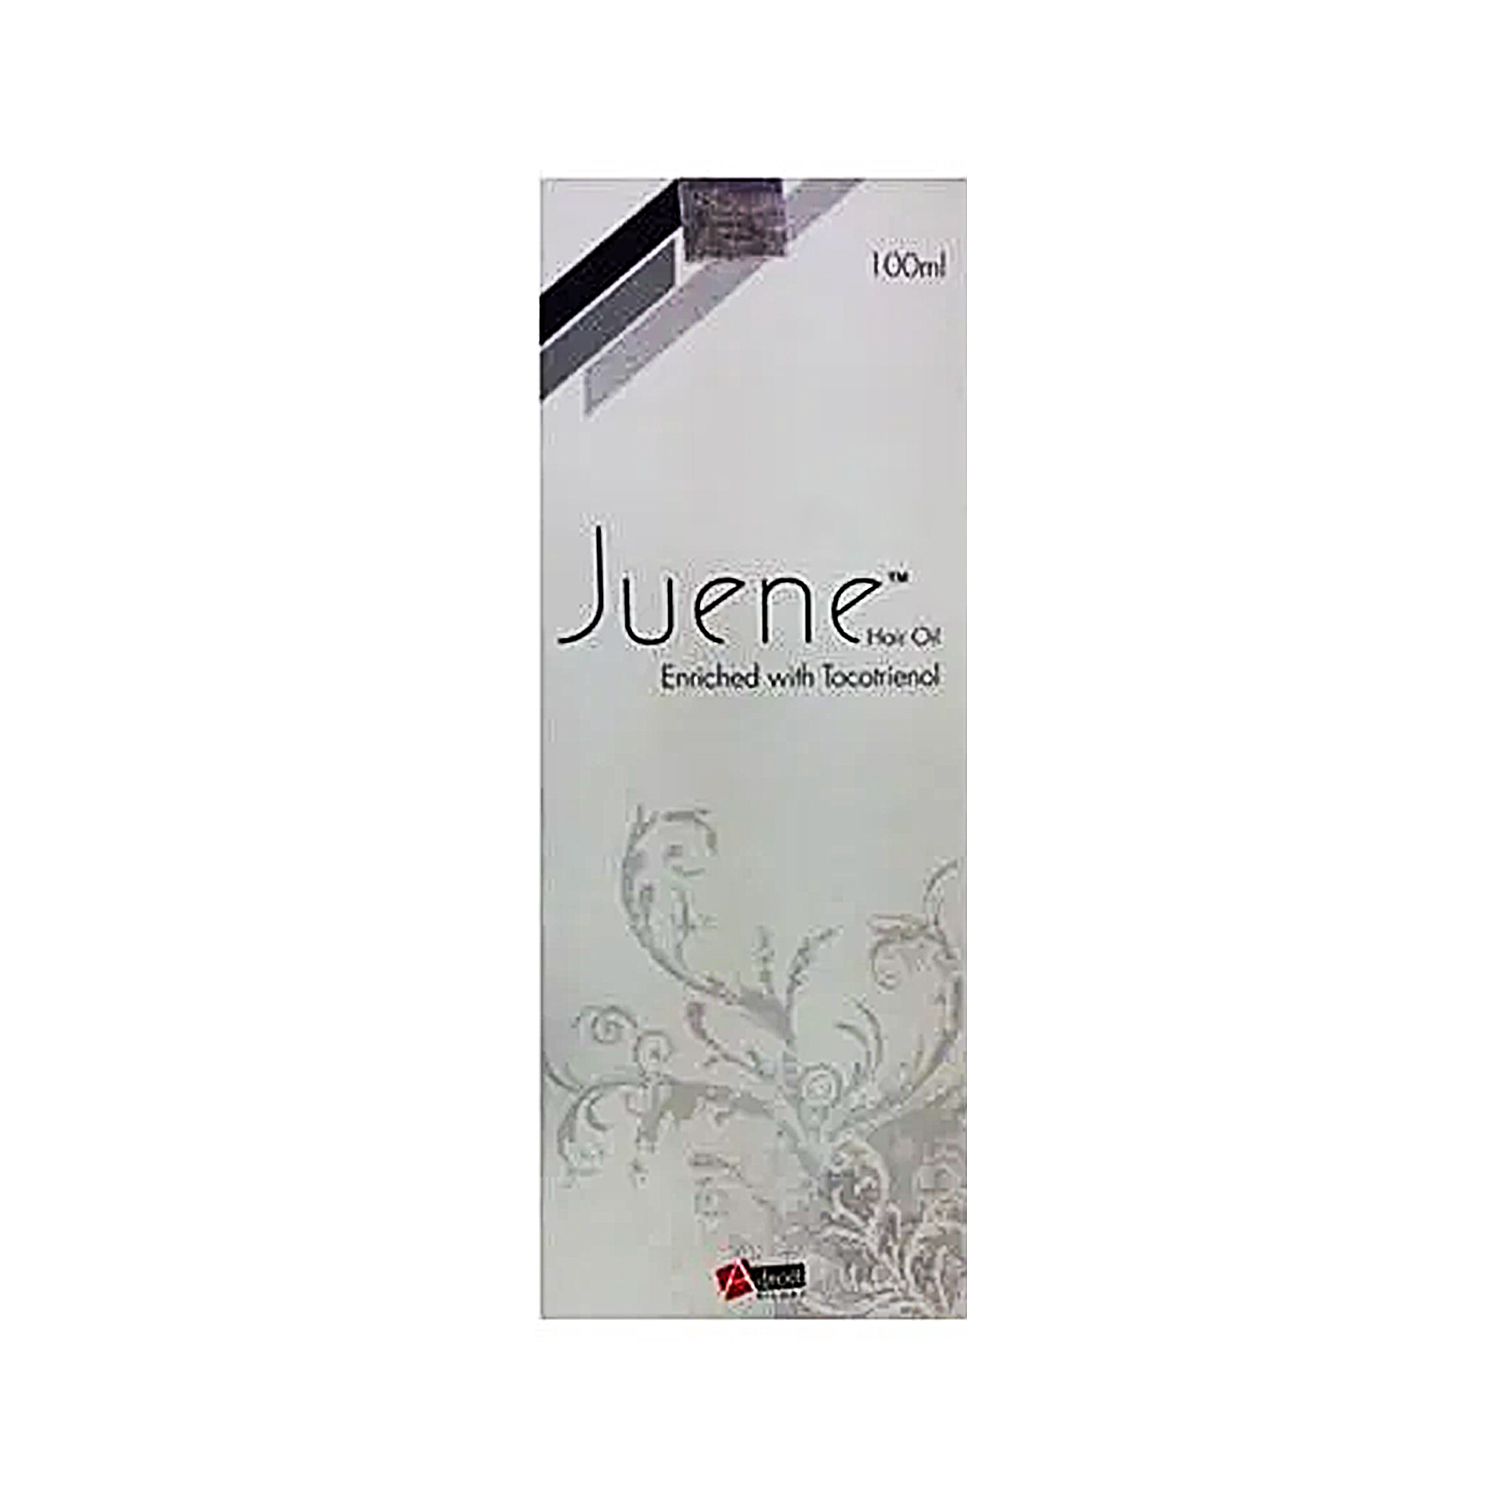 Juene Hair Oil 100ml - Buy Medicines online at Best Price from Netmeds.com